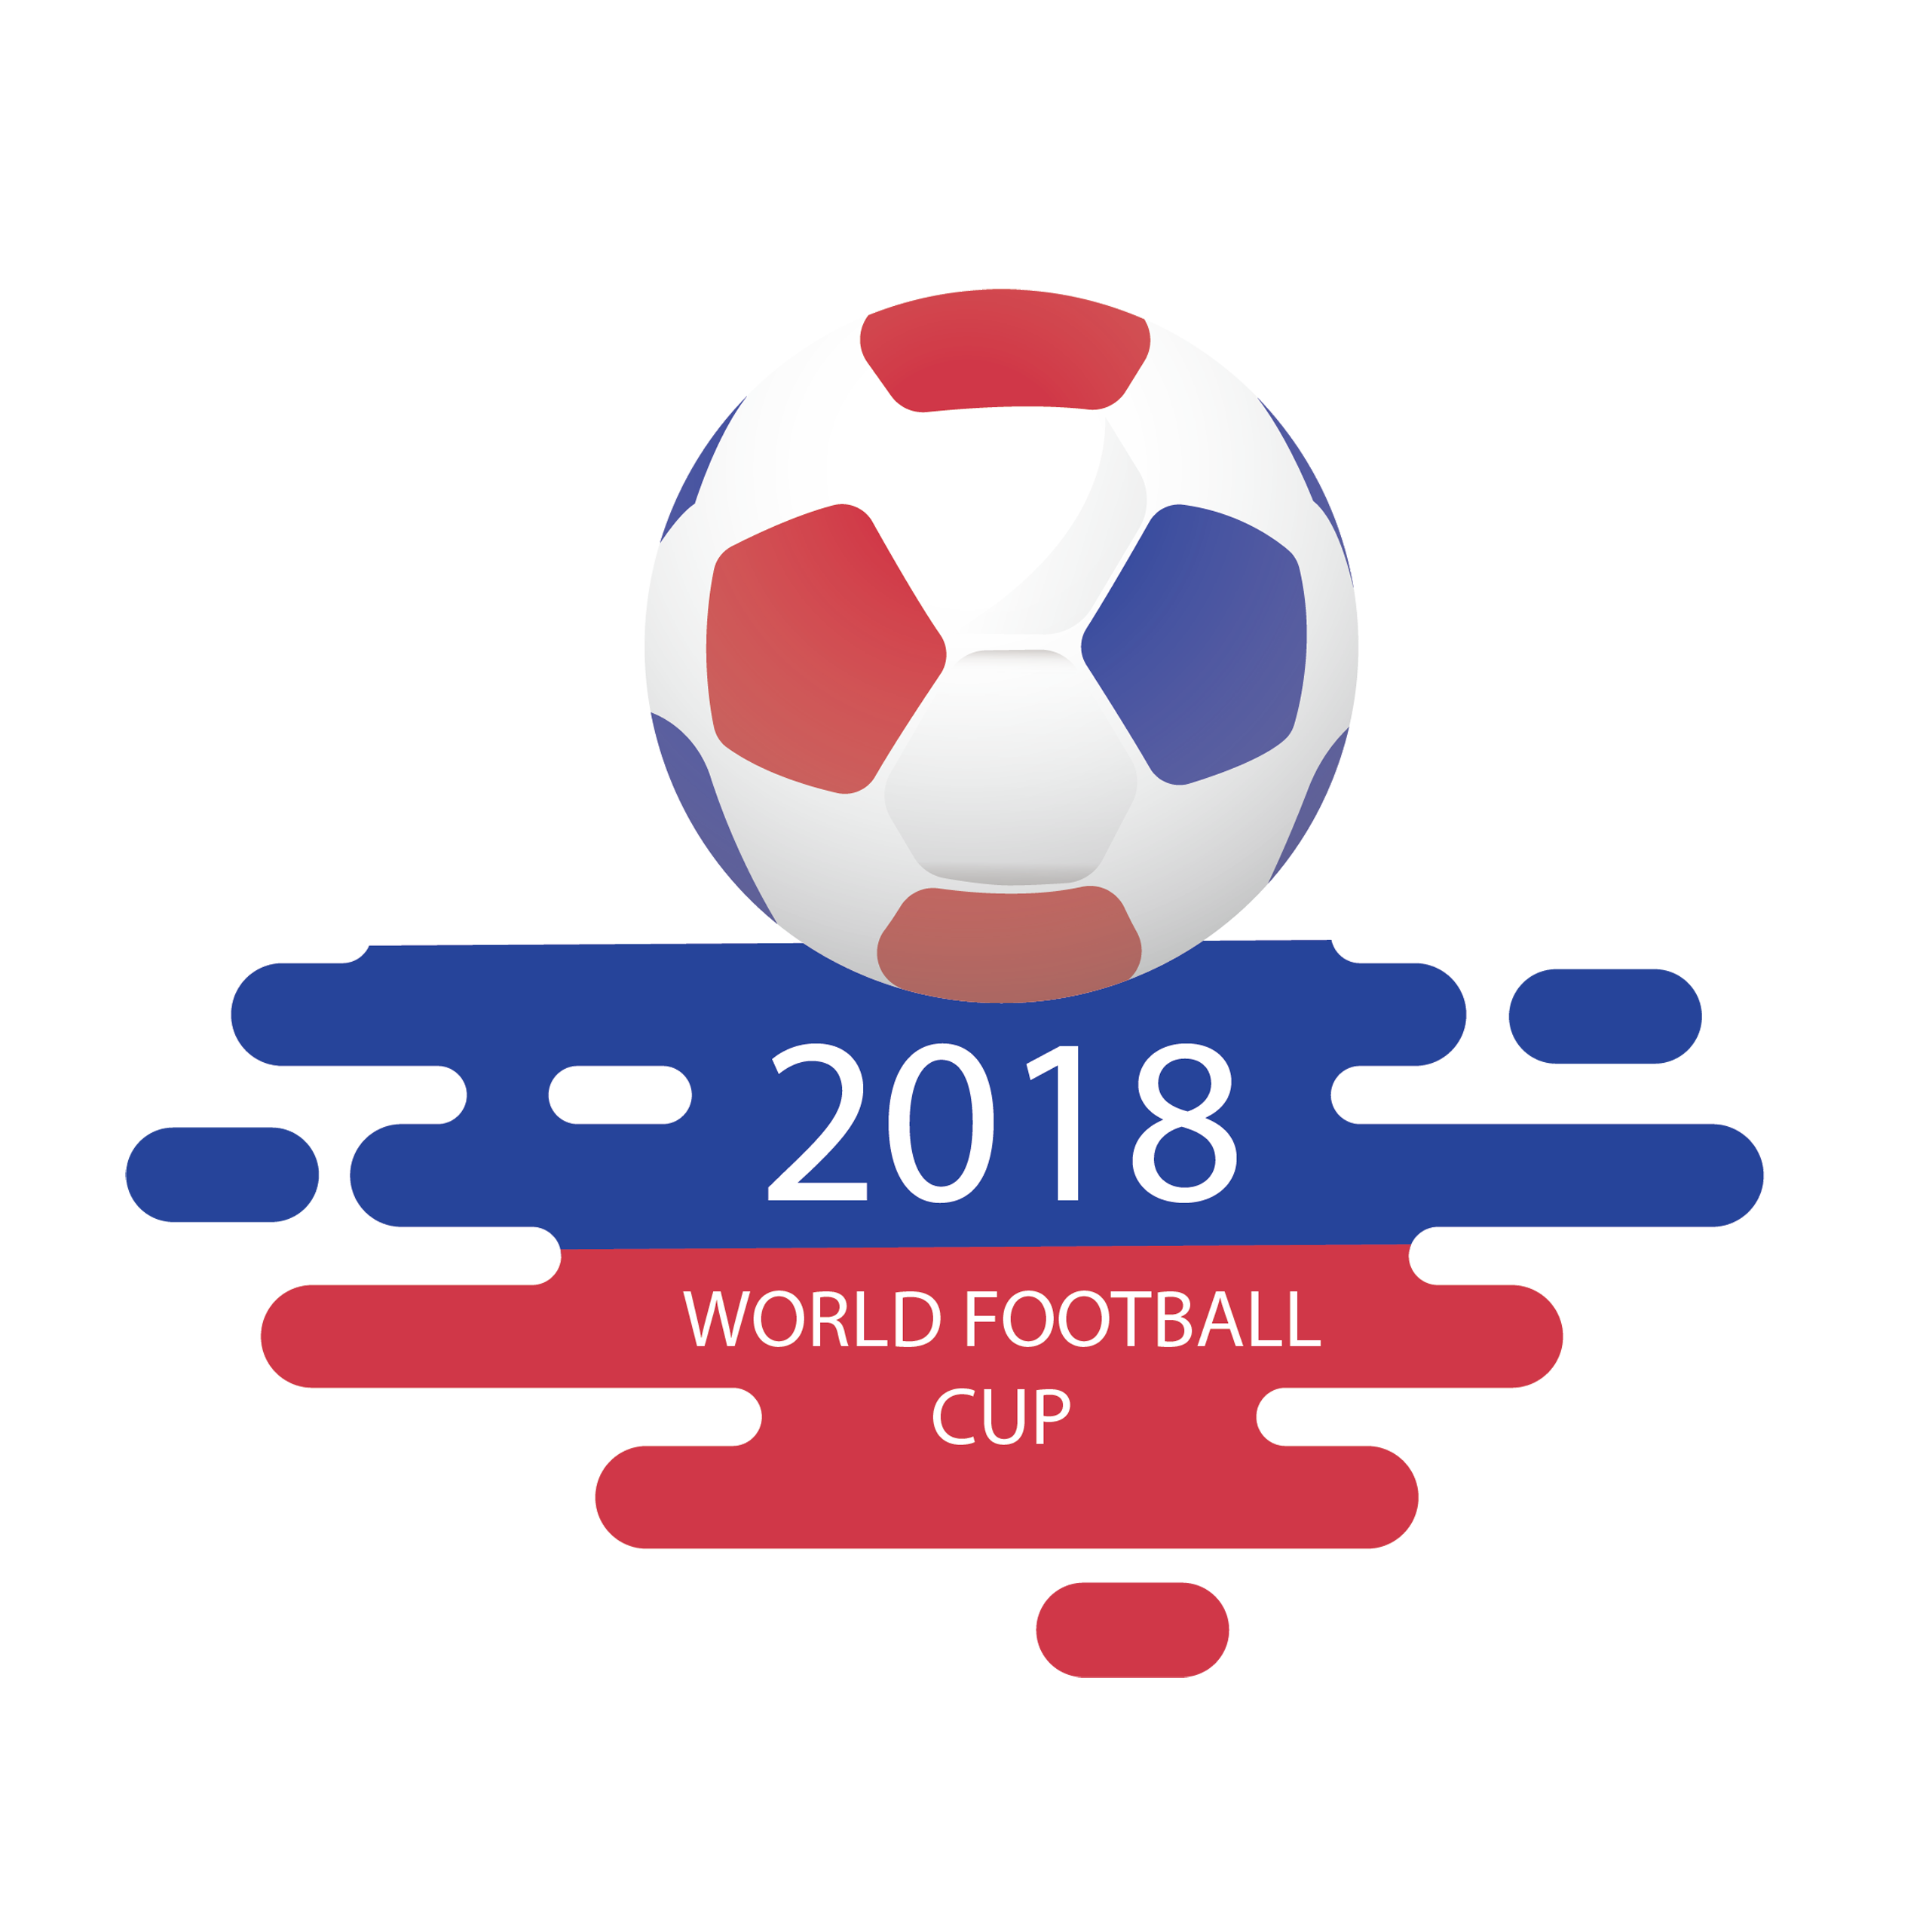 Download Cup Football Cham T Shirt 2018 World Clothing Hq Png Image Freepngimg